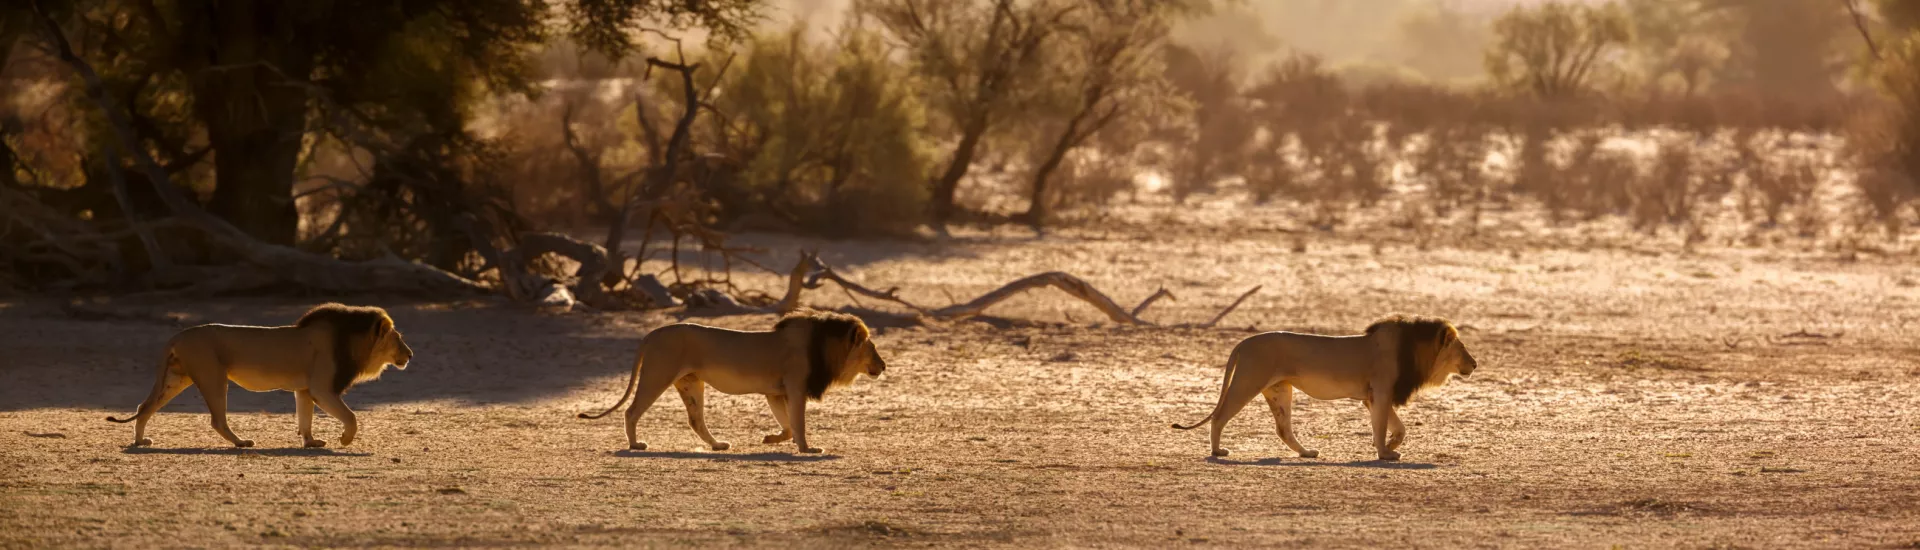 African lion, Botswana